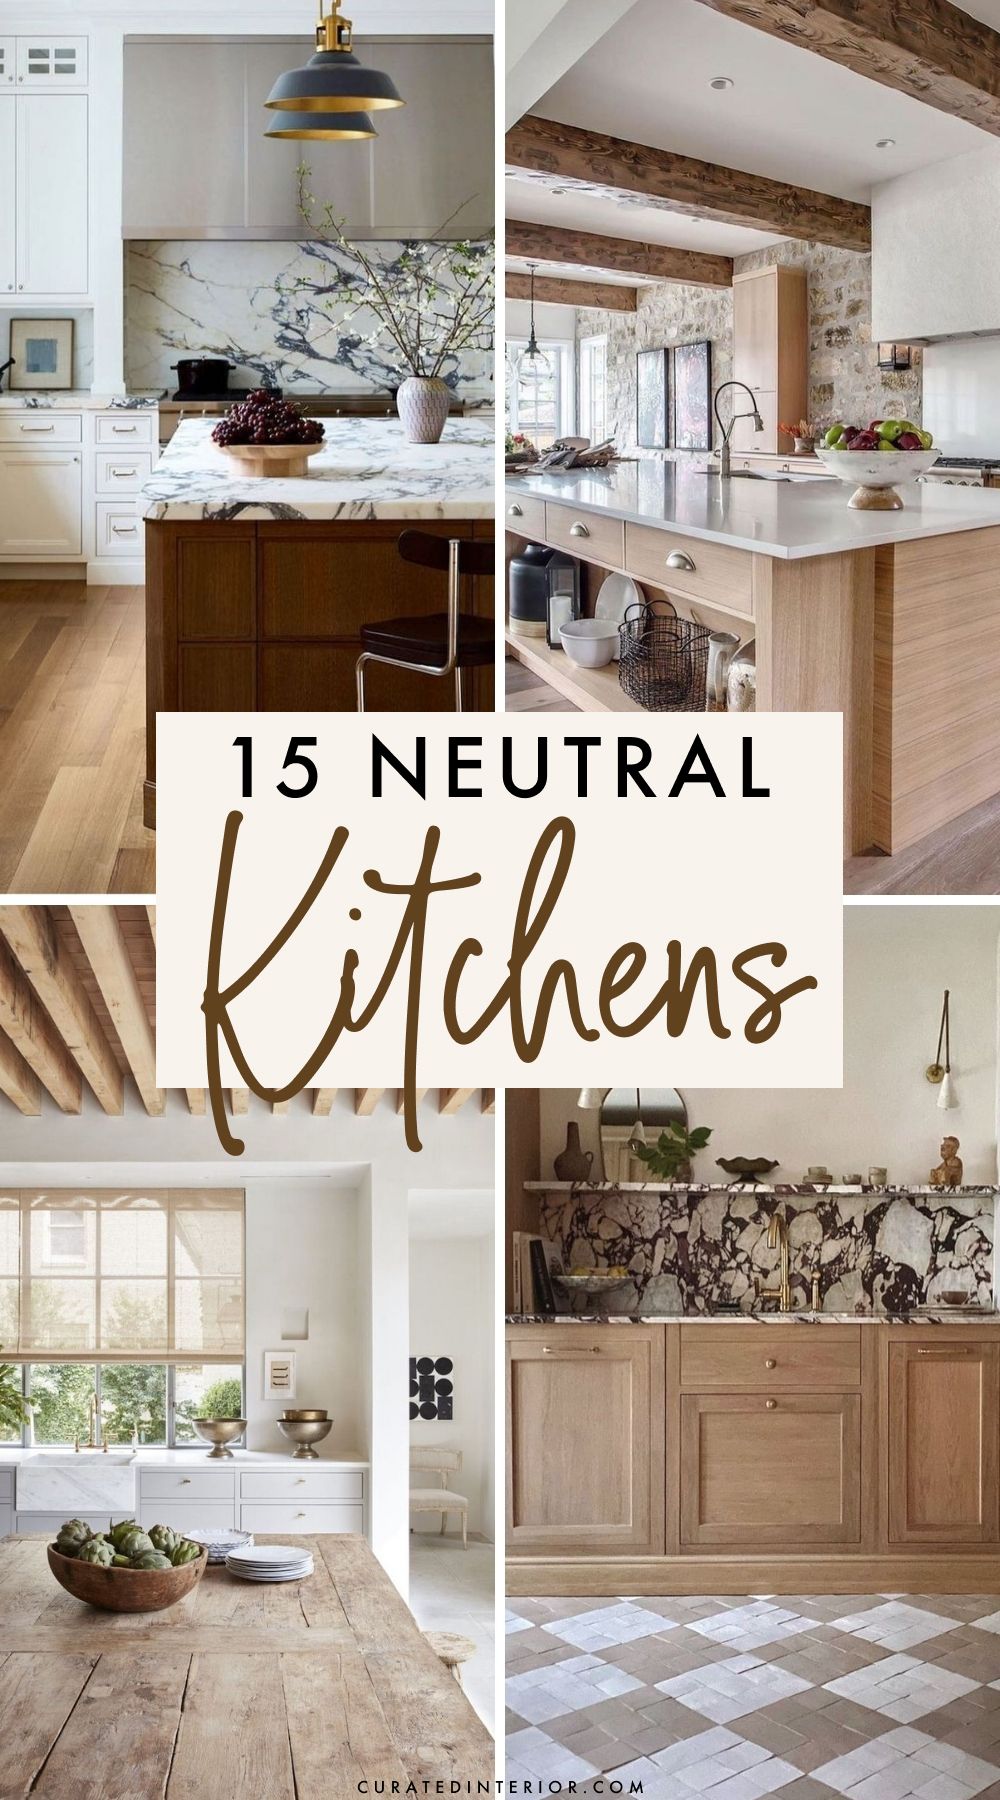 https://curatedinterior.com/wp-content/uploads/2021/01/15-neutral-kitchens.jpg